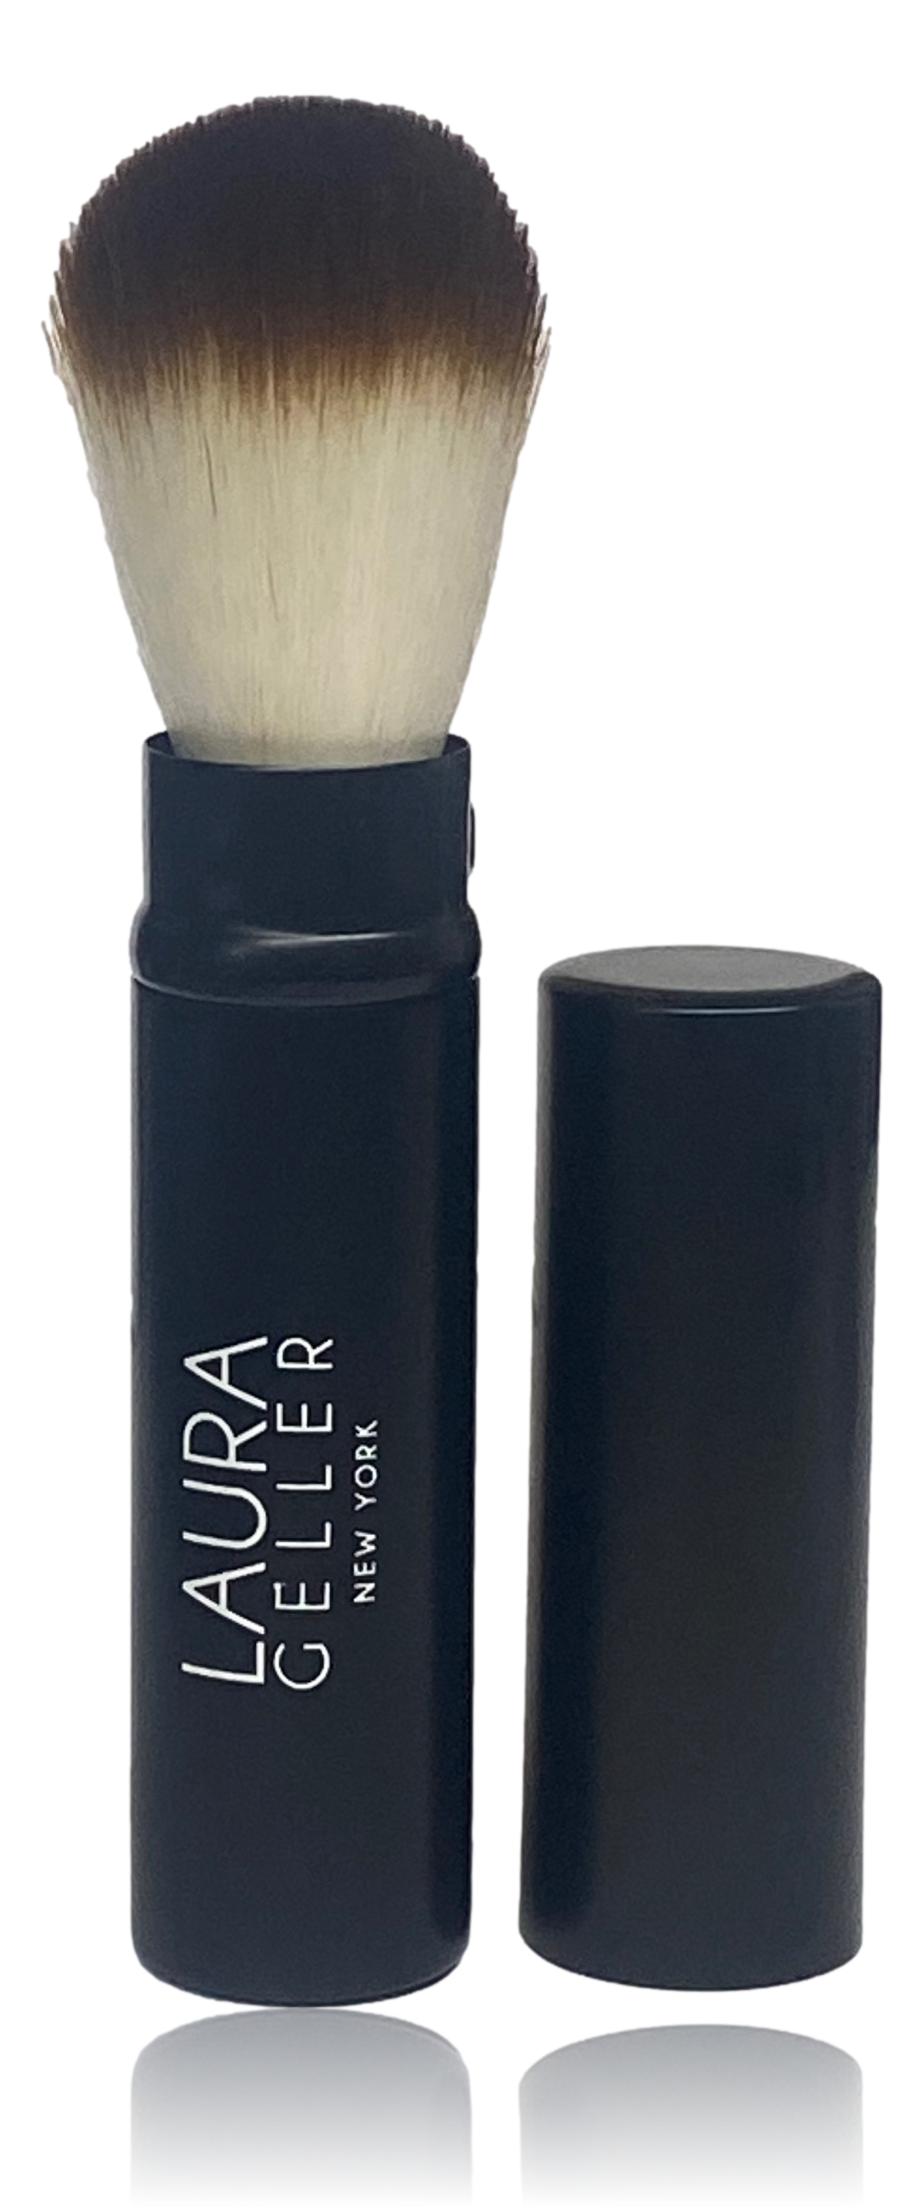 Laura Geller Beauty Retractable Powder Brush